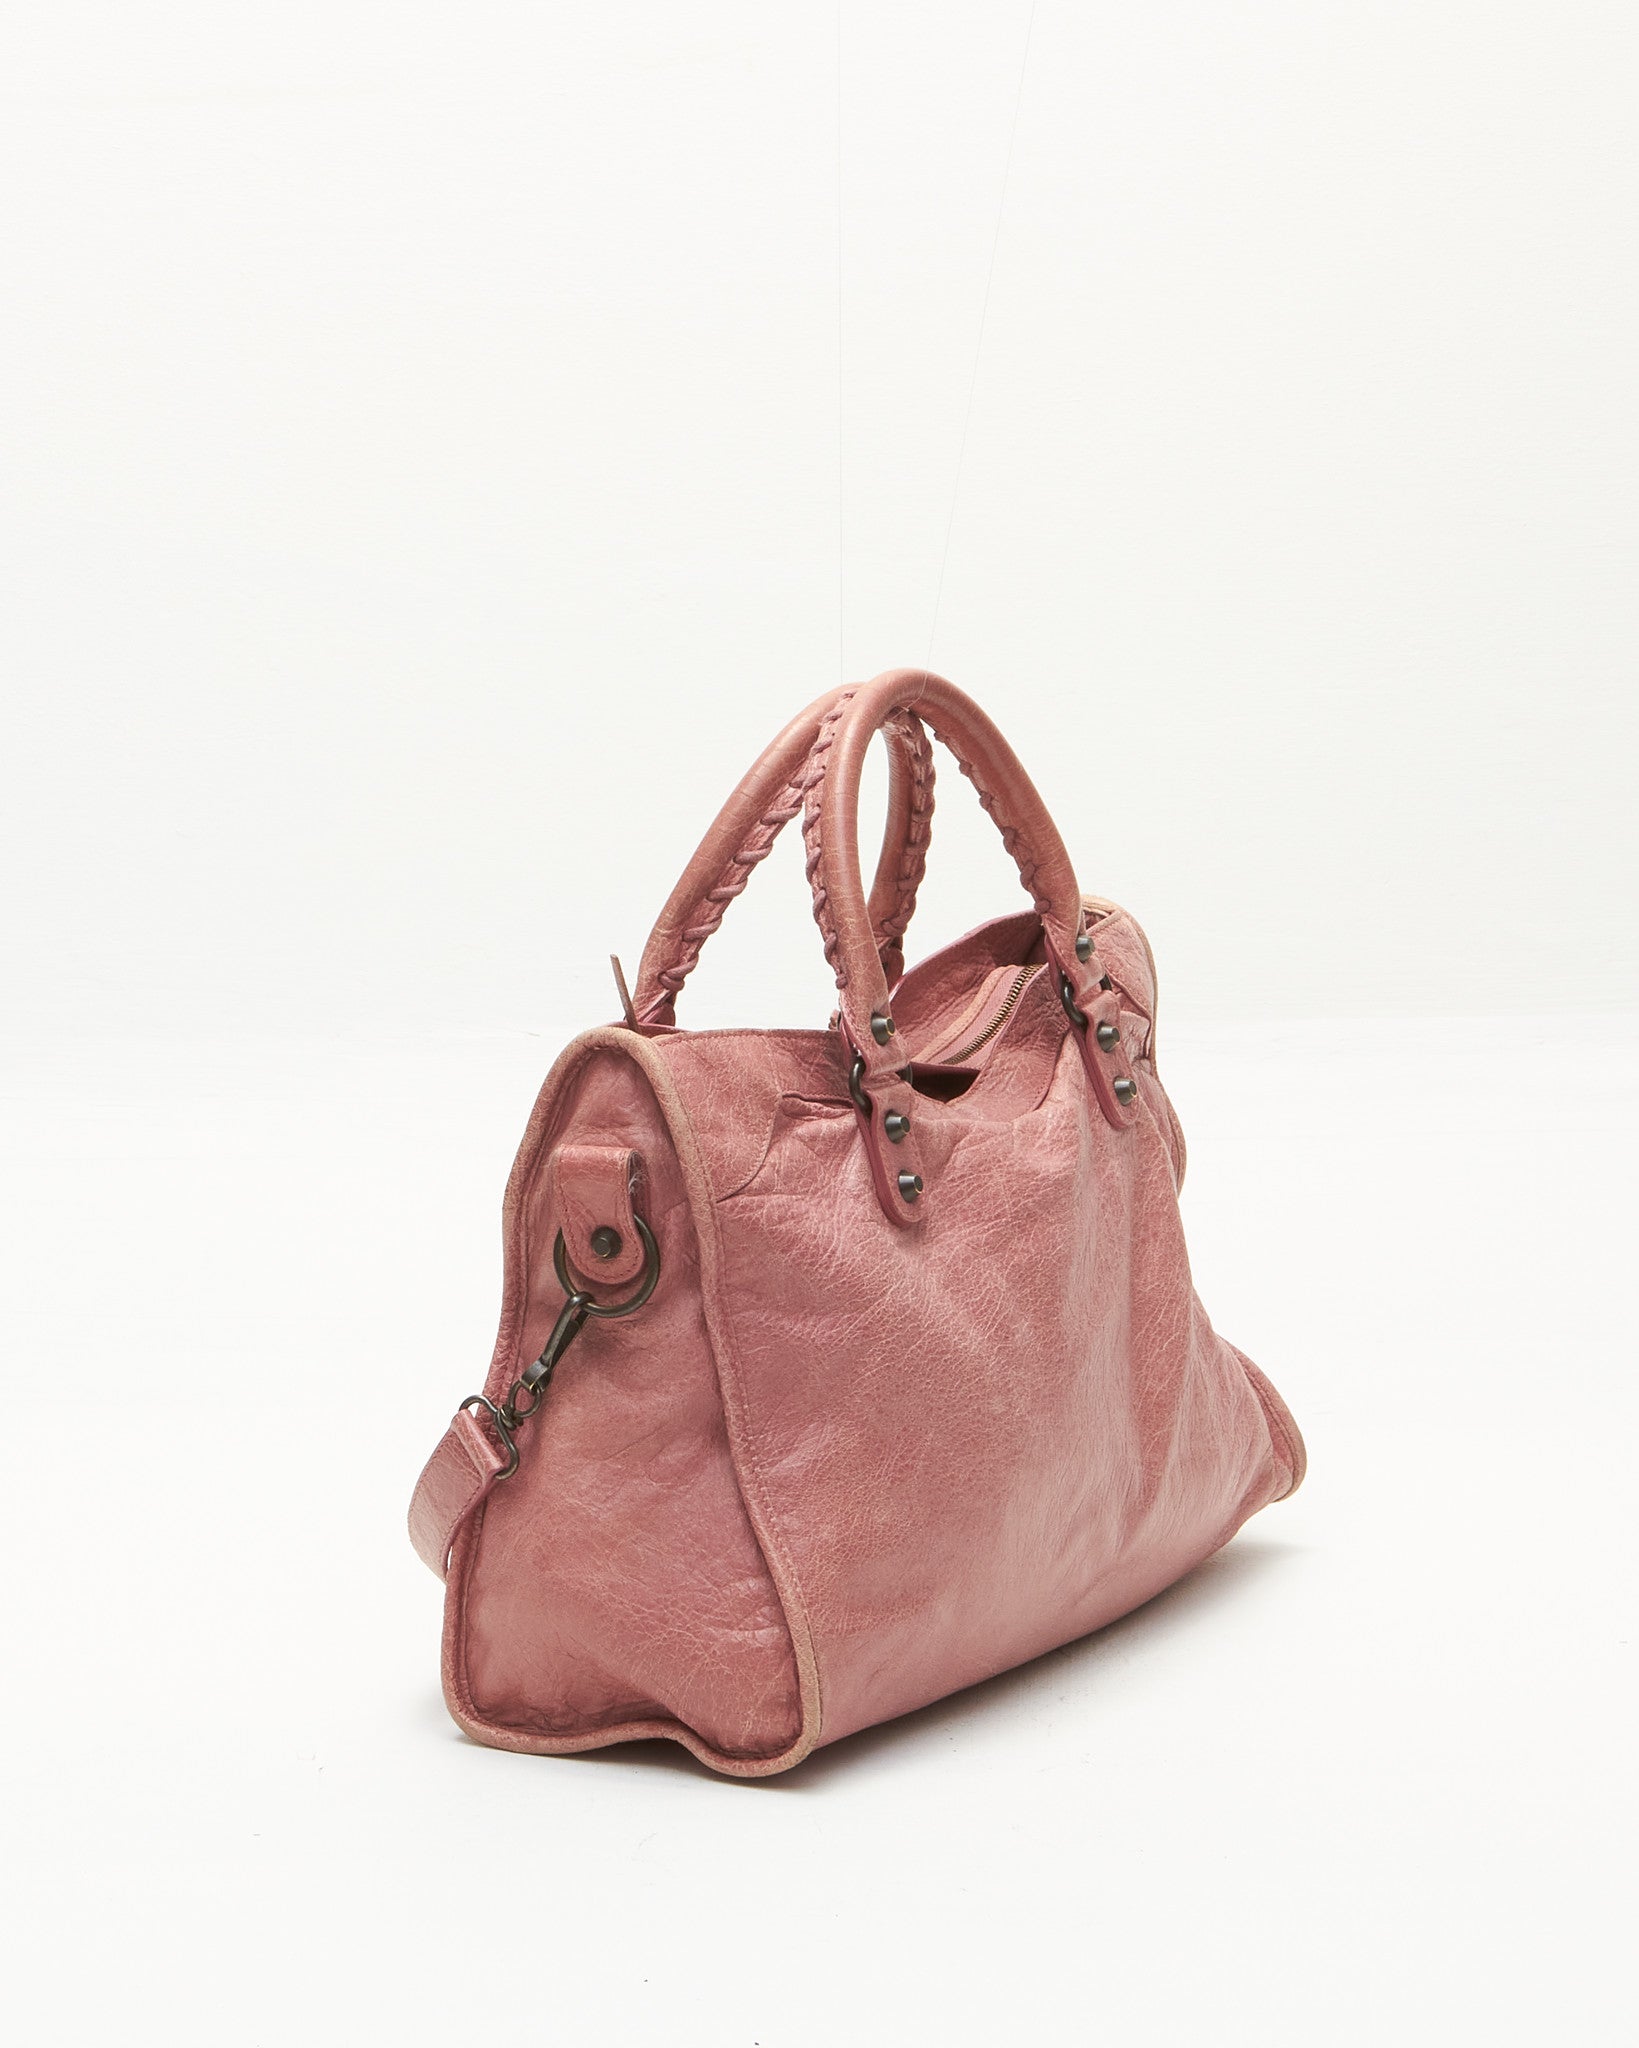 Balenciaga Pink Leather Classic City Bag